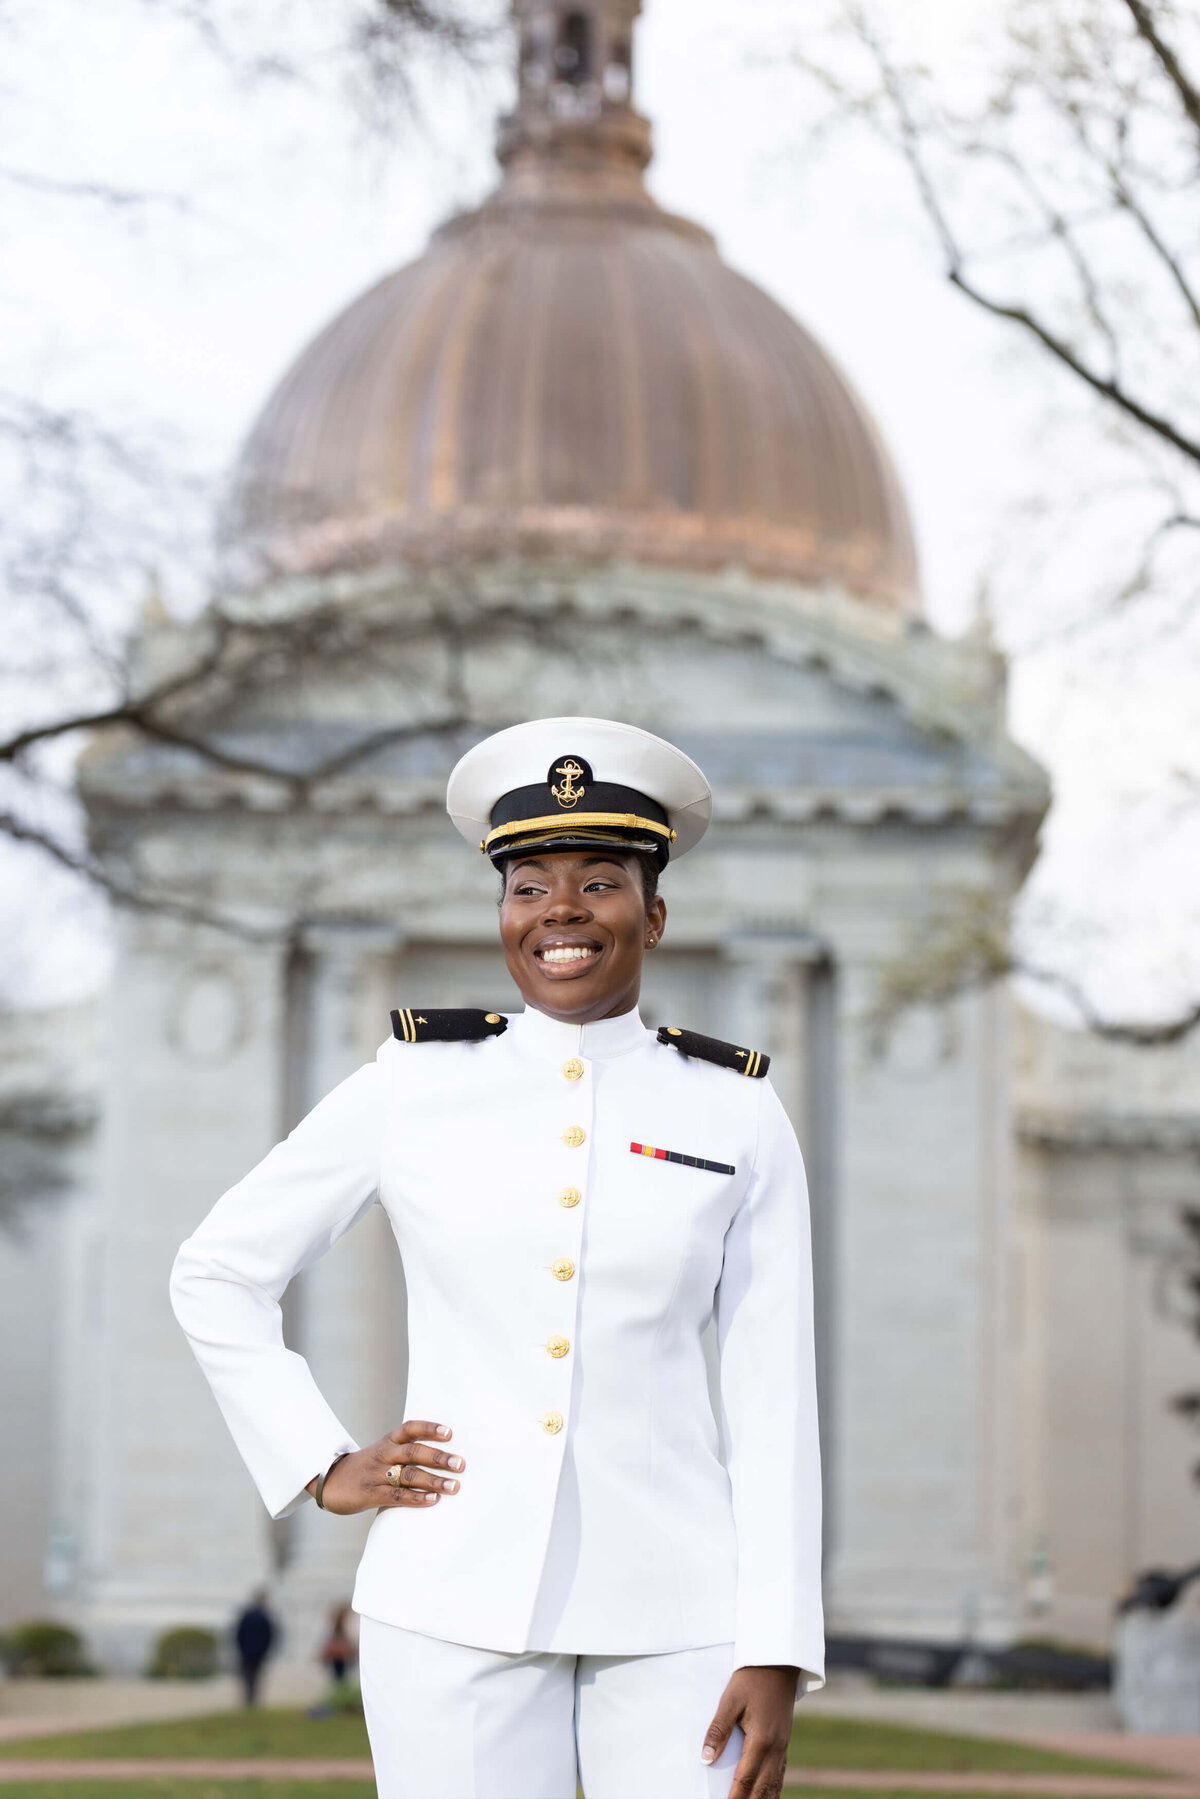 Senior Portrait in Uniform at Naval Academy Chapel Dome.